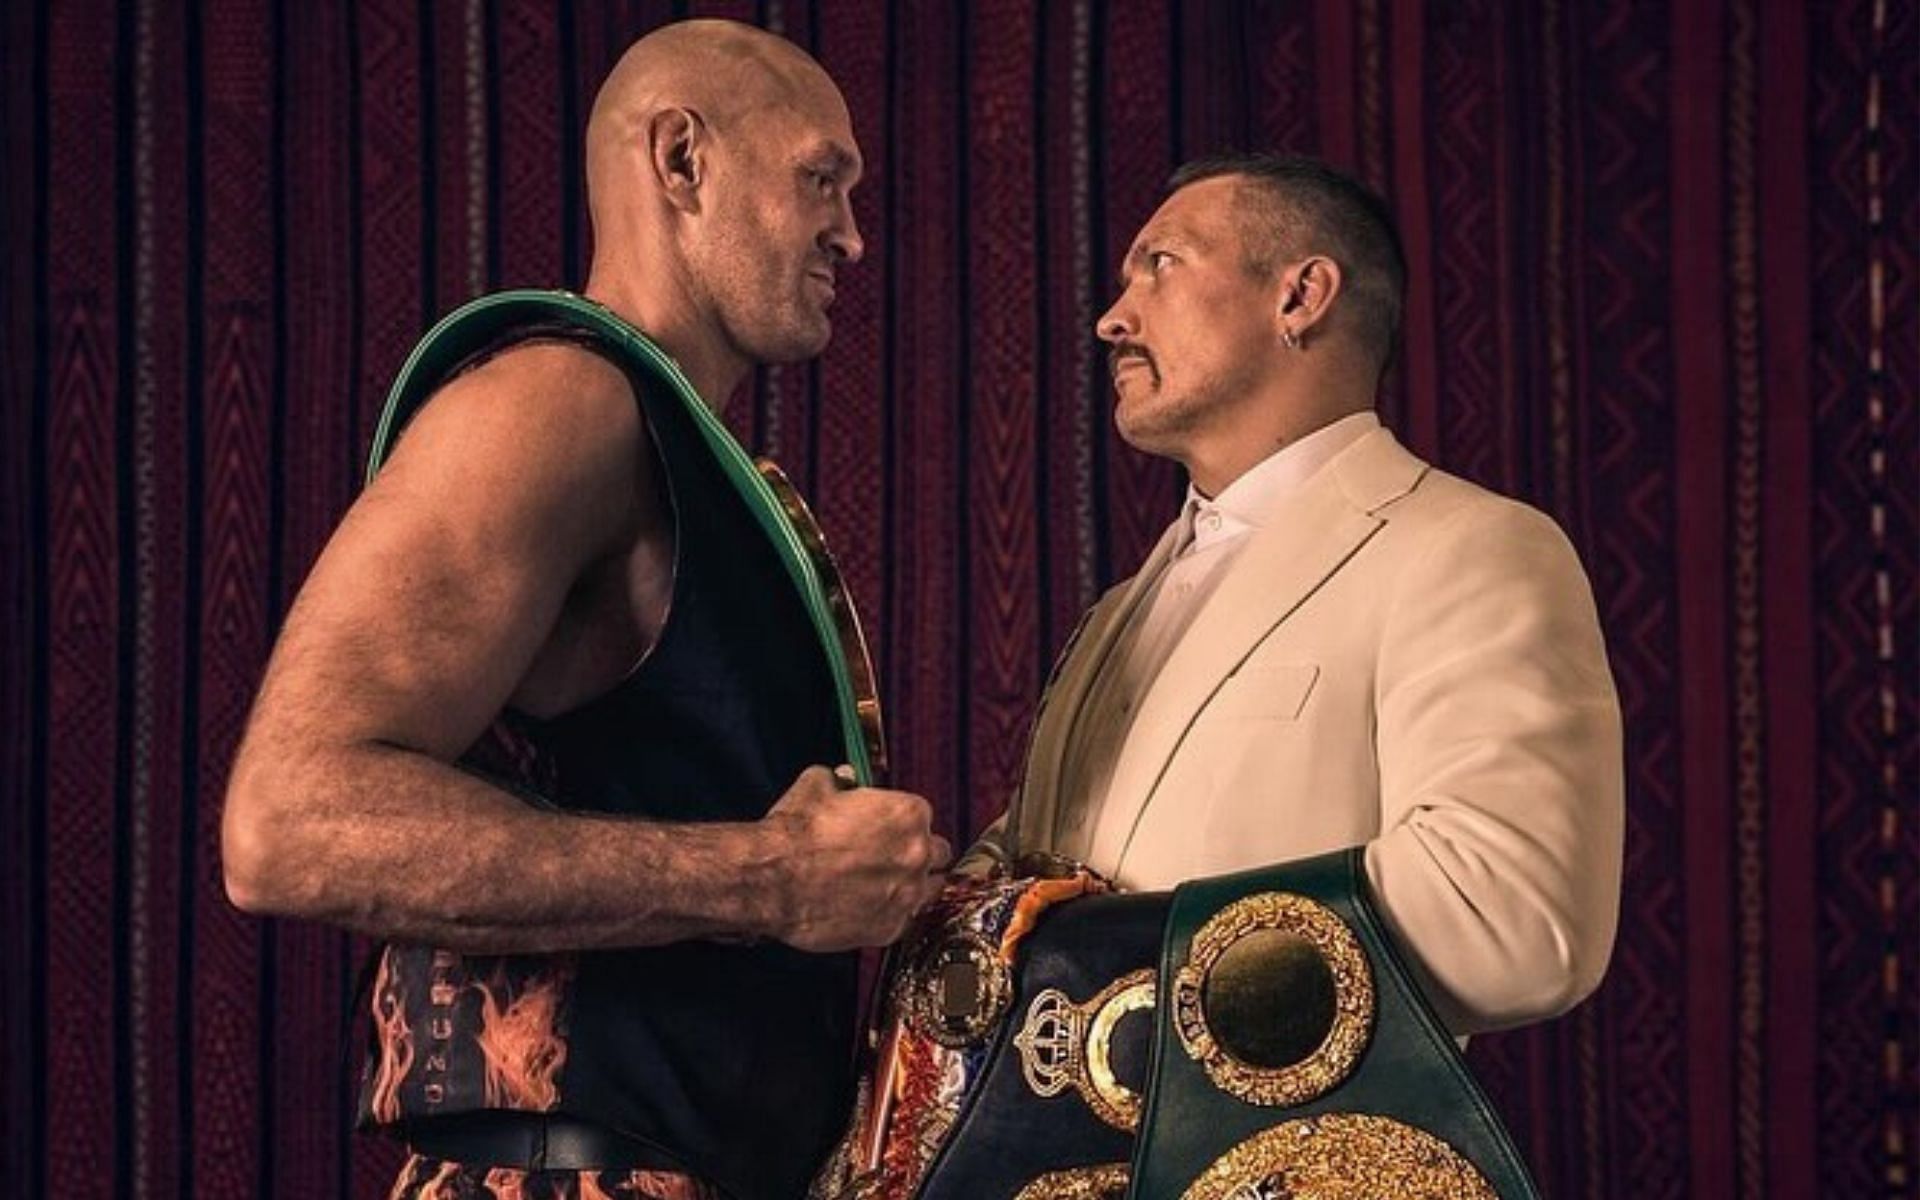 Tyson Fury (left) vs. Oleksandr Usyk (right) will grant boxing it